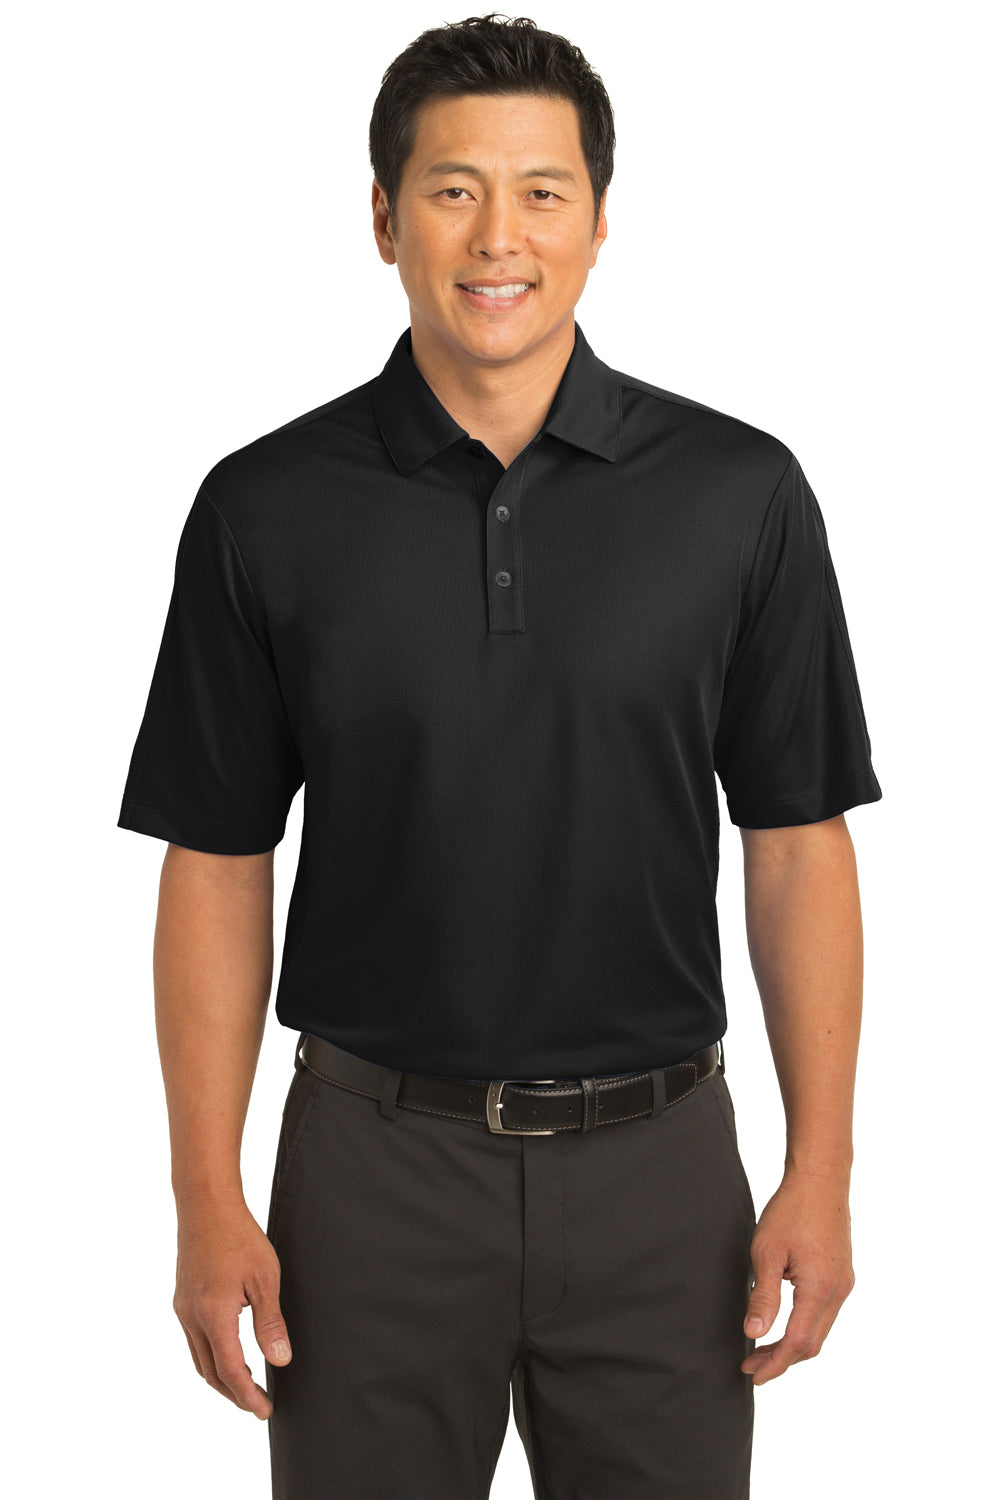 Nike 266998 Mens Tech Sport Dri-Fit Moisture Wicking Short Sleeve Polo Shirt Black Model Front